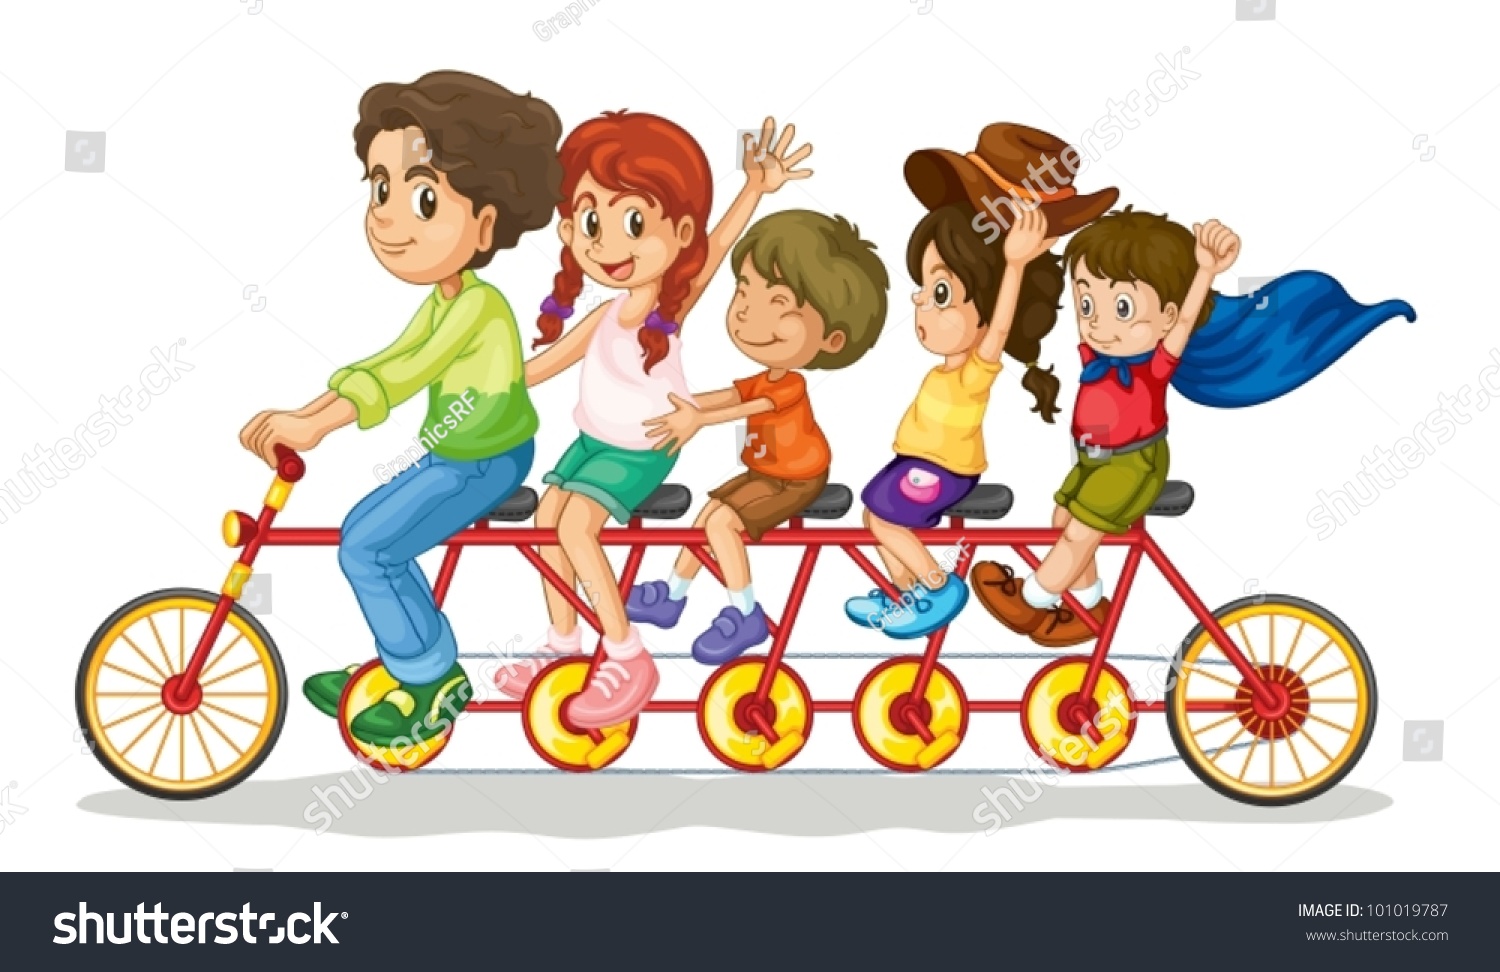 family bike ride clipart - photo #13